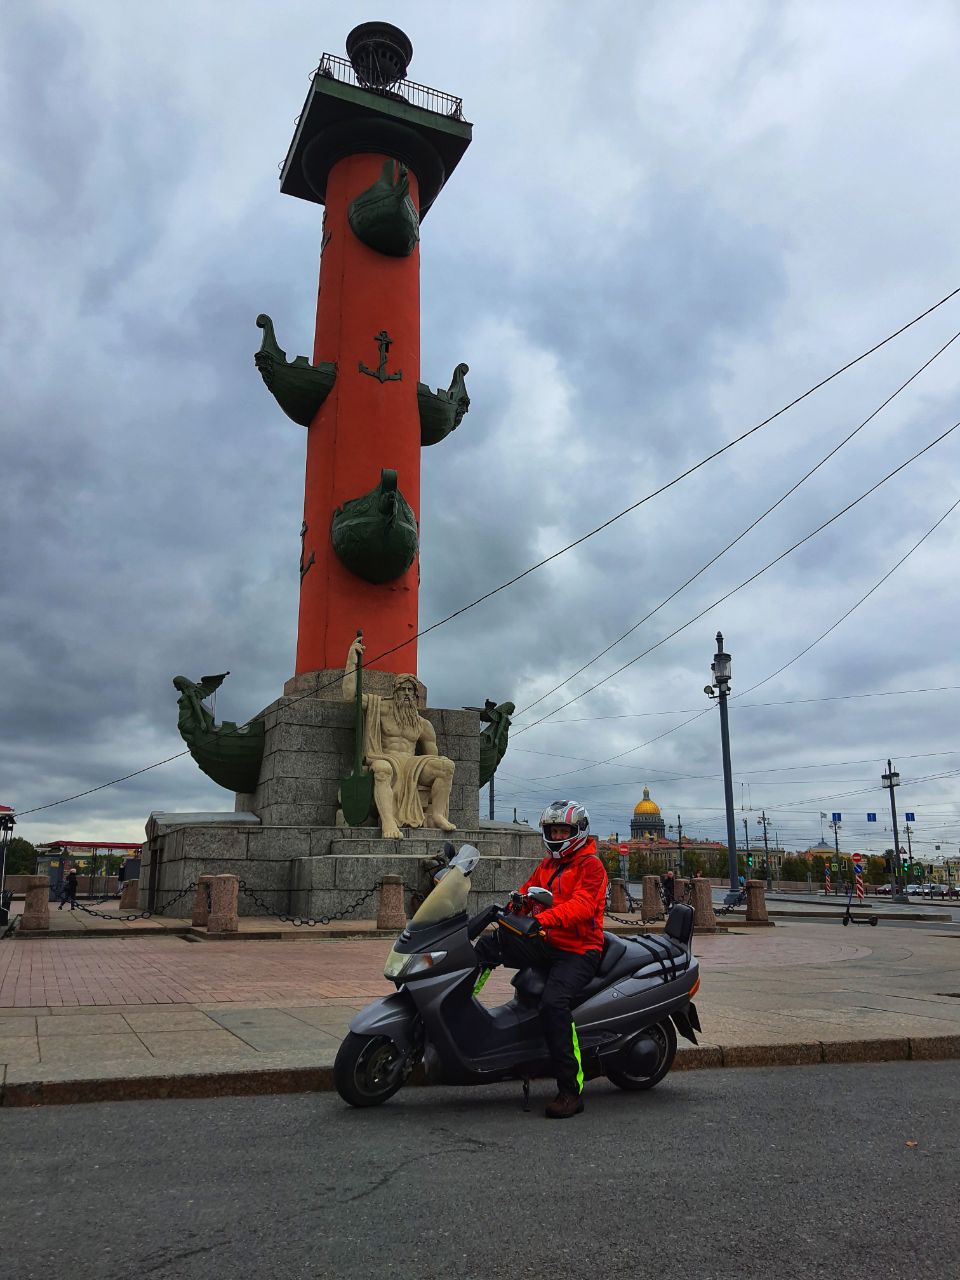 Владимир - Санкт-Петербург 1500 км на скутере